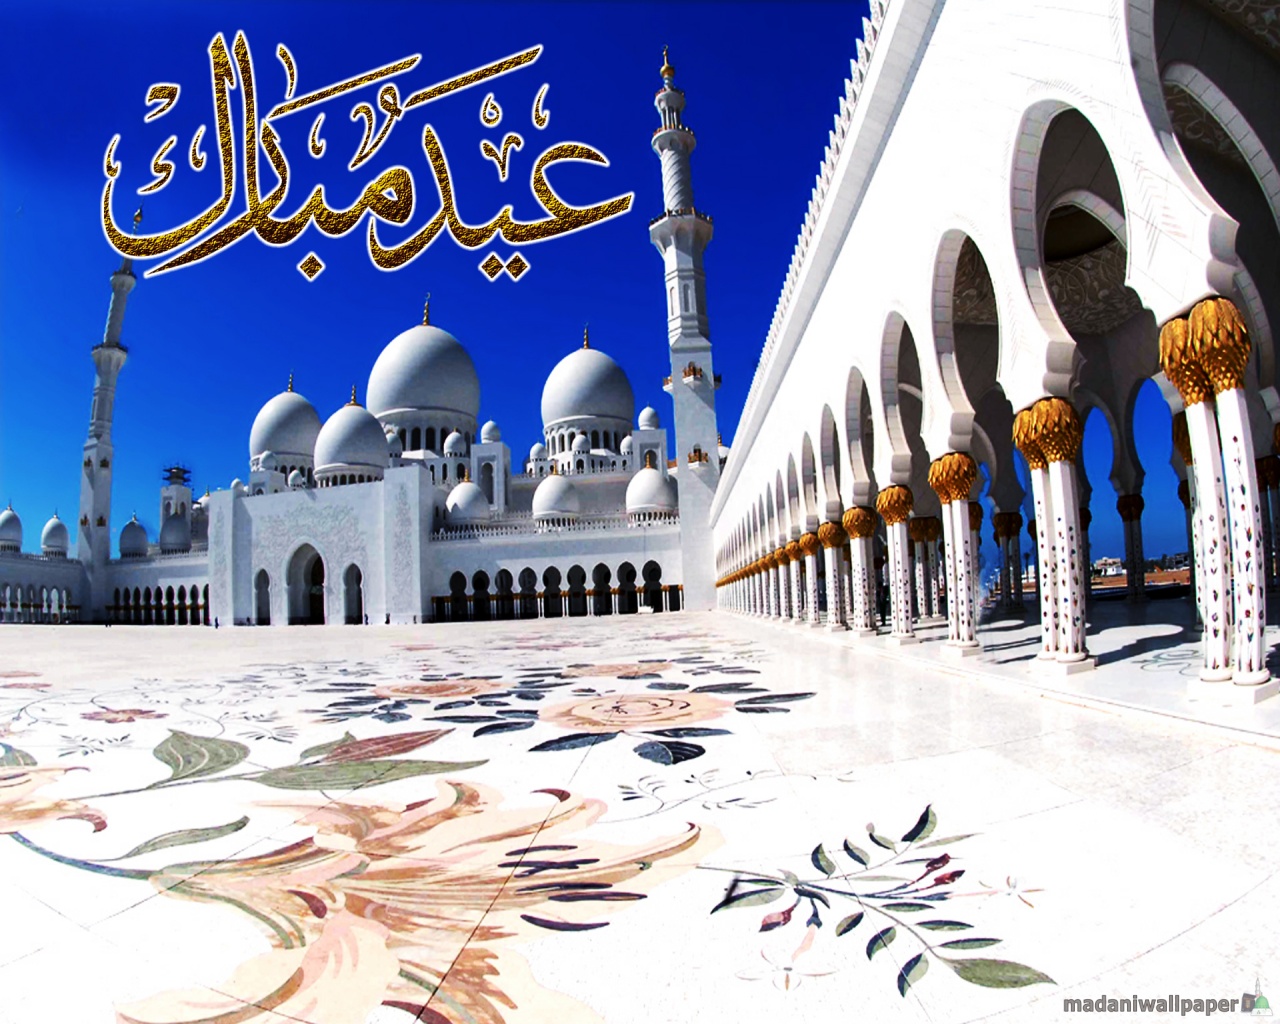 Set New Eid Image For Your Pc Desktop Wallpaper On